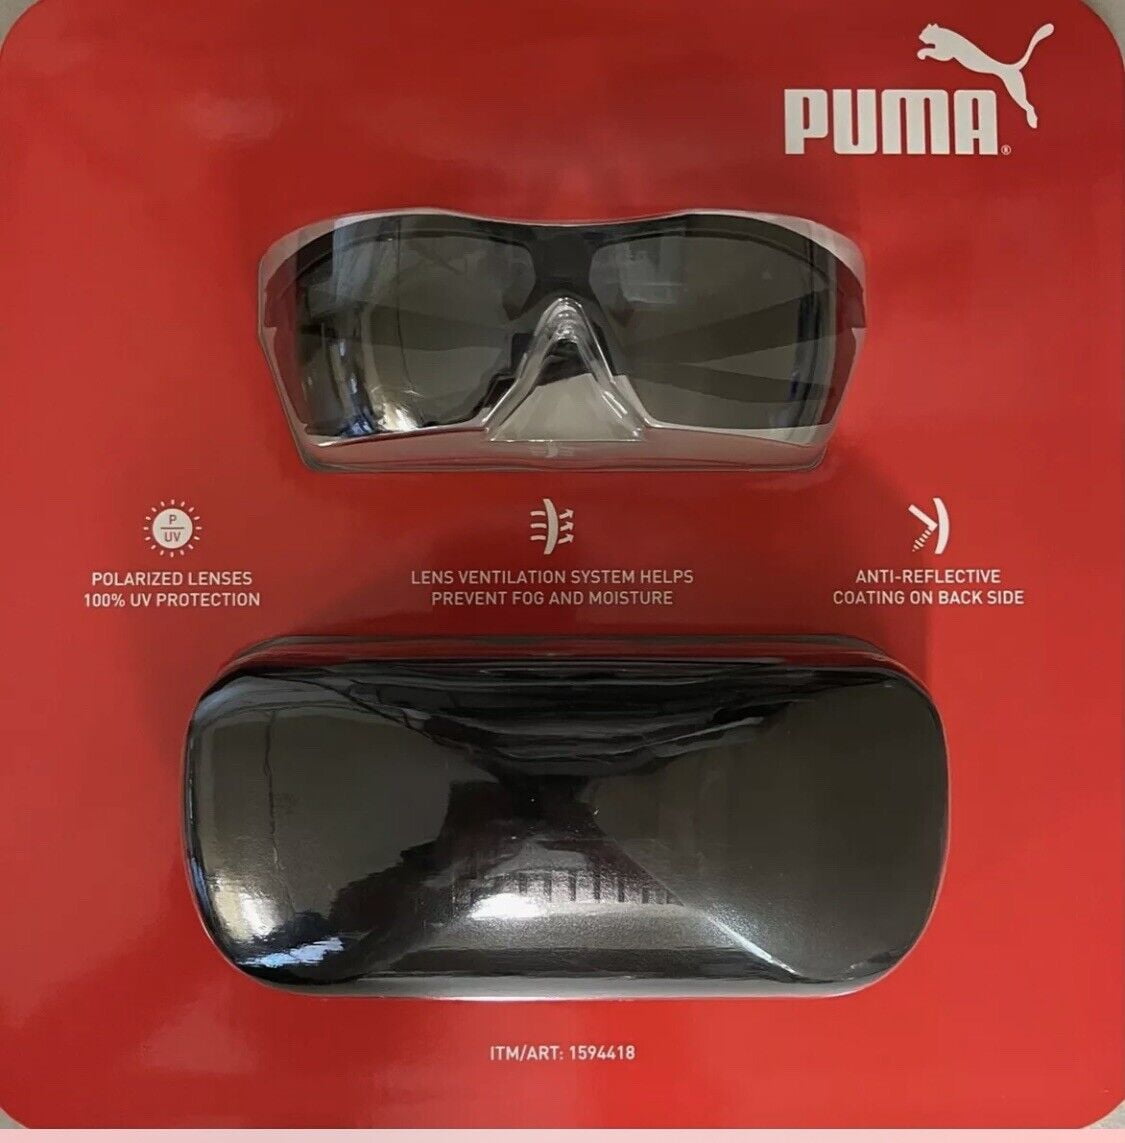 PUMA Sunglasses Polarized Lenses 100% Protection Anti-Relective Coating with Case - Walmart.com